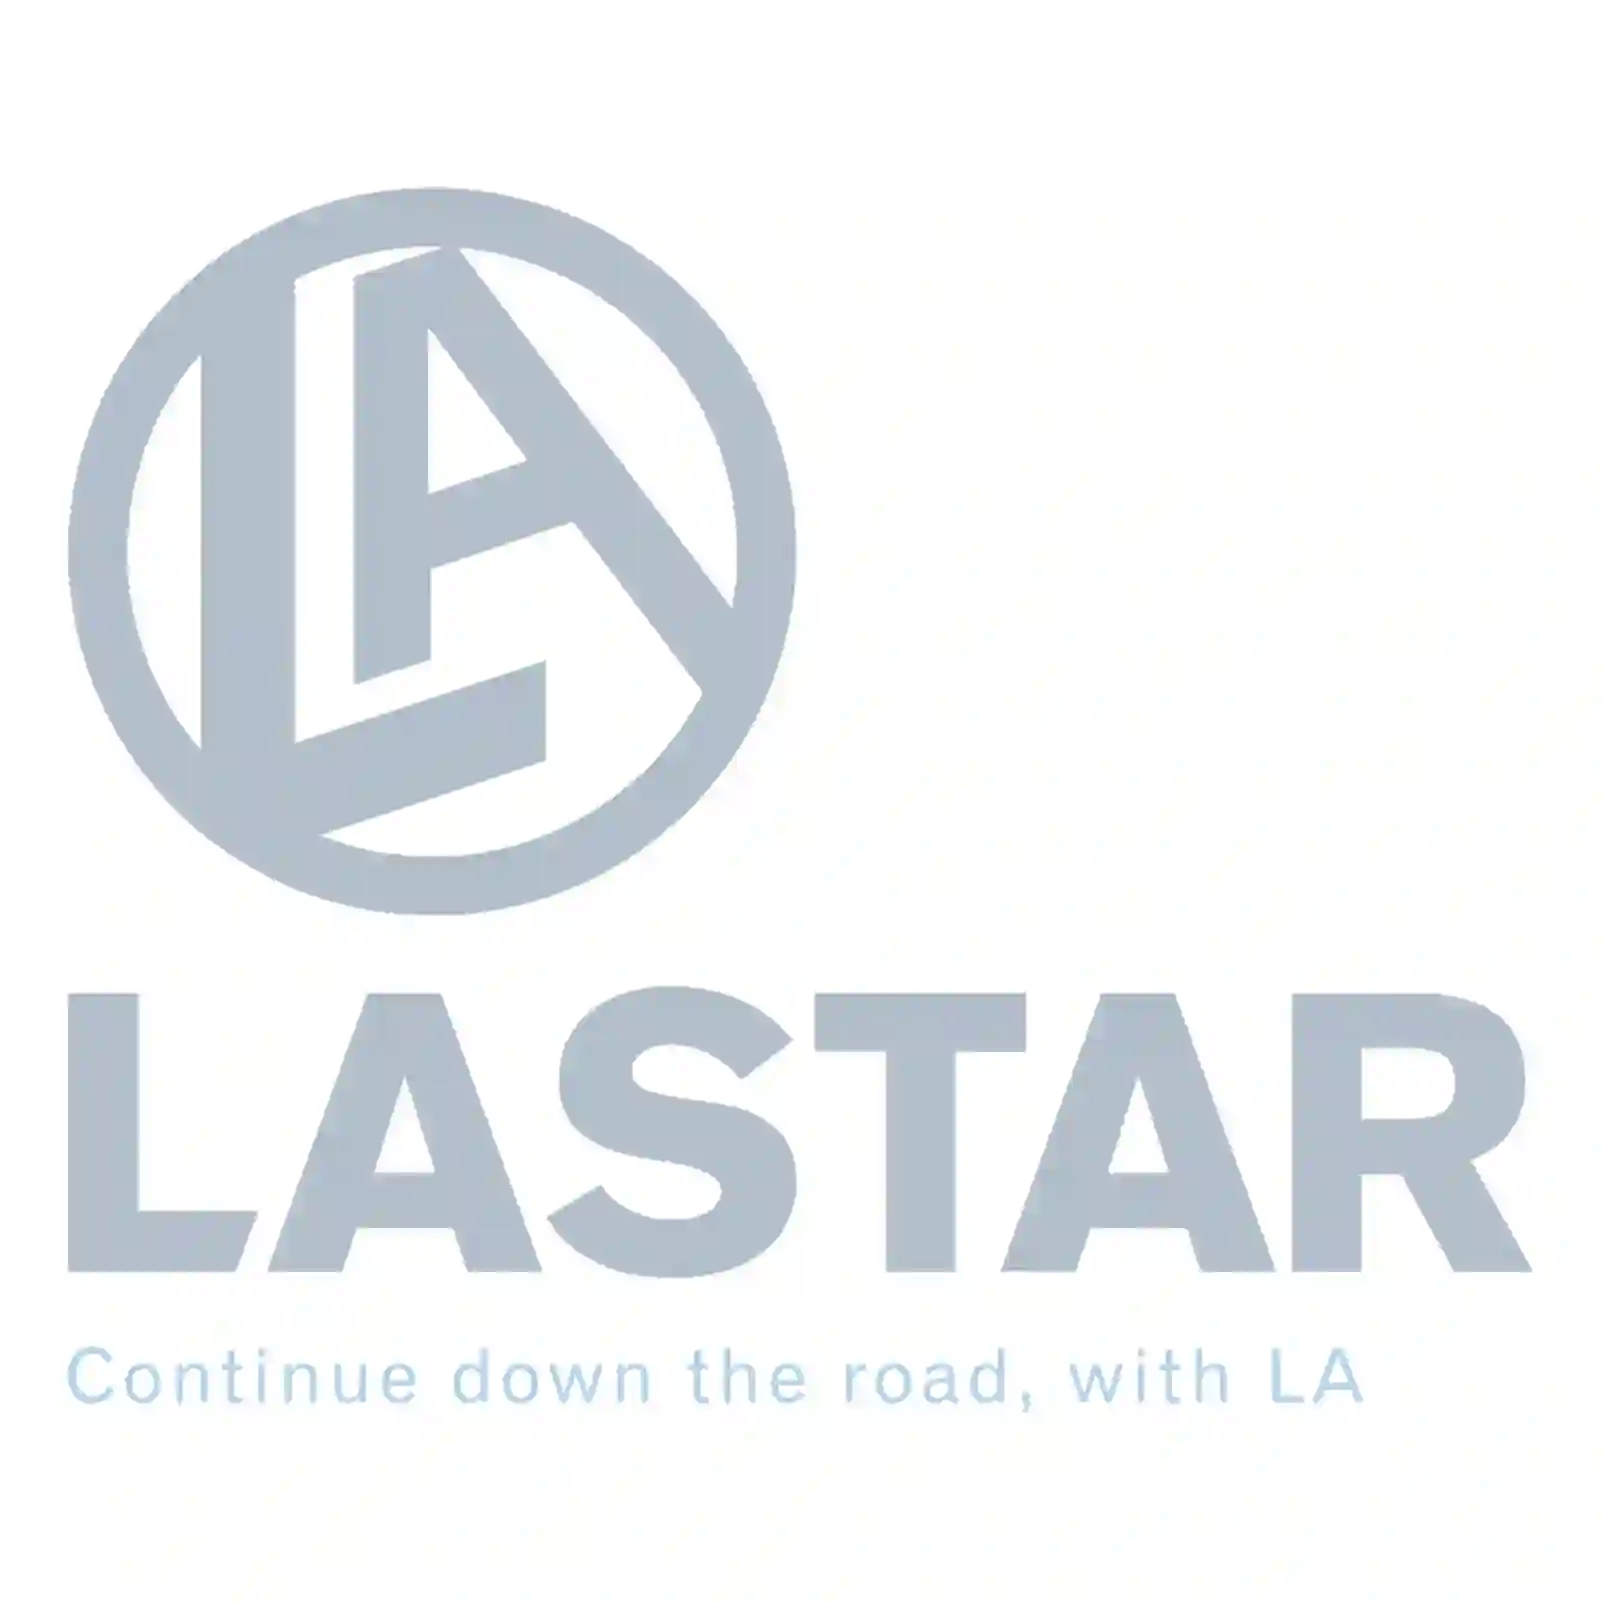  Clearance lamp || Lastar Spare Part | Truck Spare Parts, Auotomotive Spare Parts